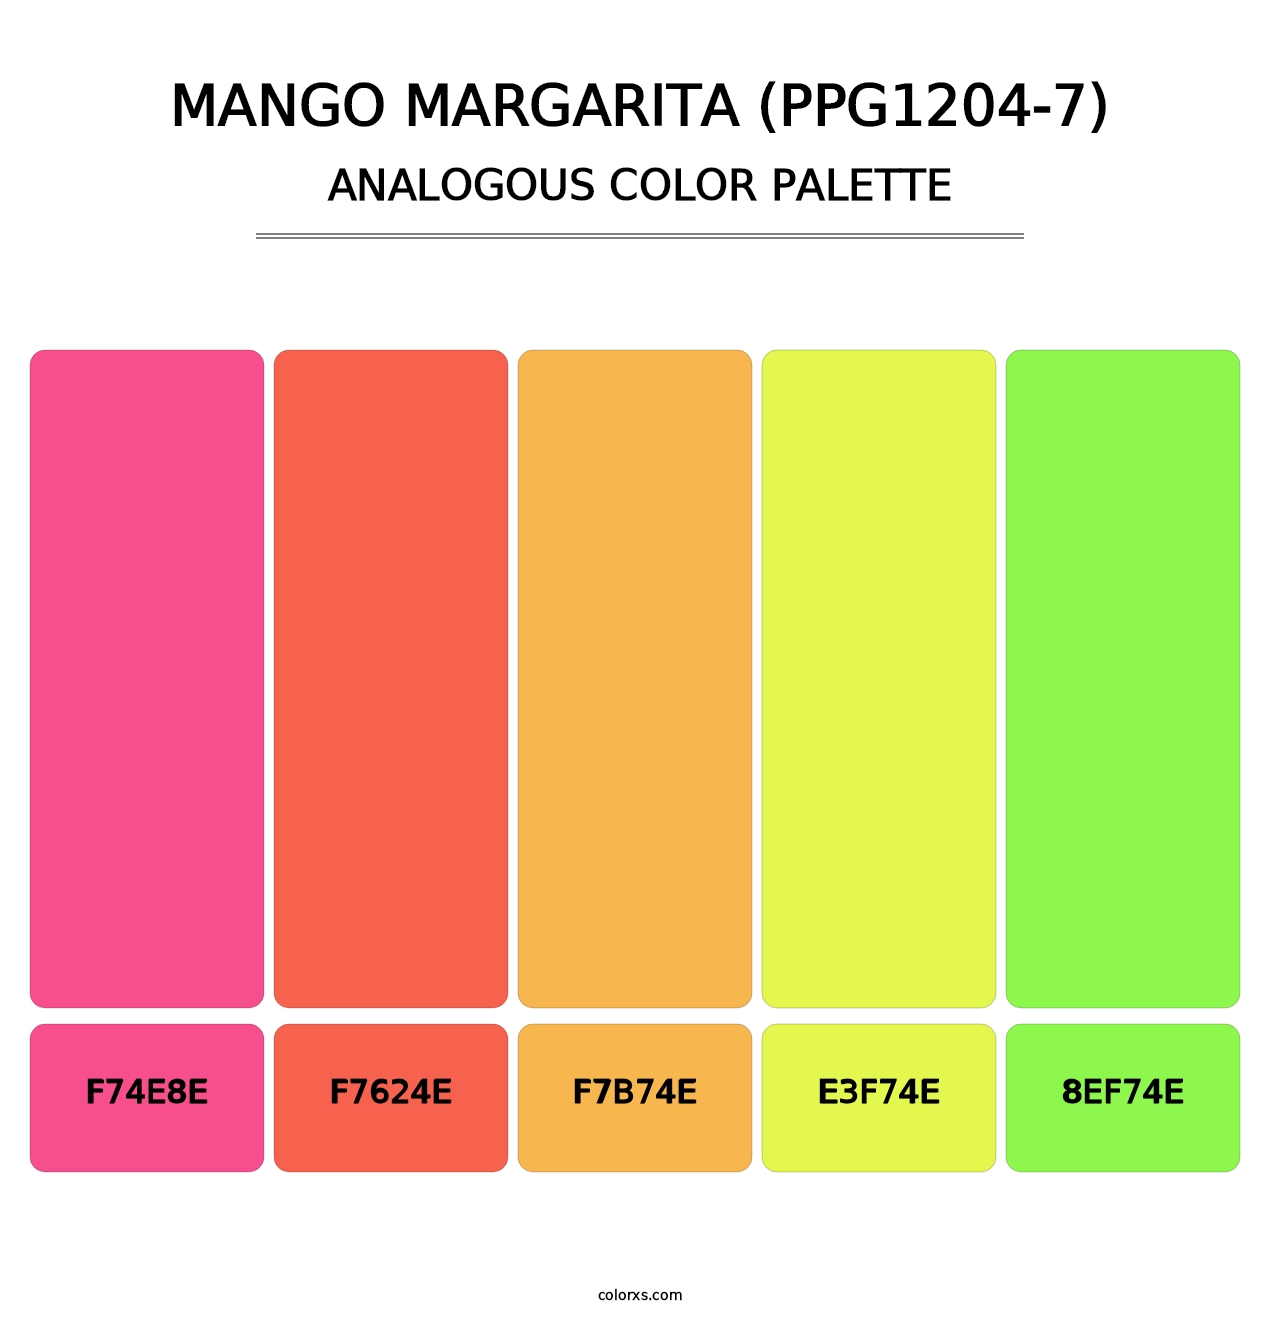 Mango Margarita (PPG1204-7) - Analogous Color Palette